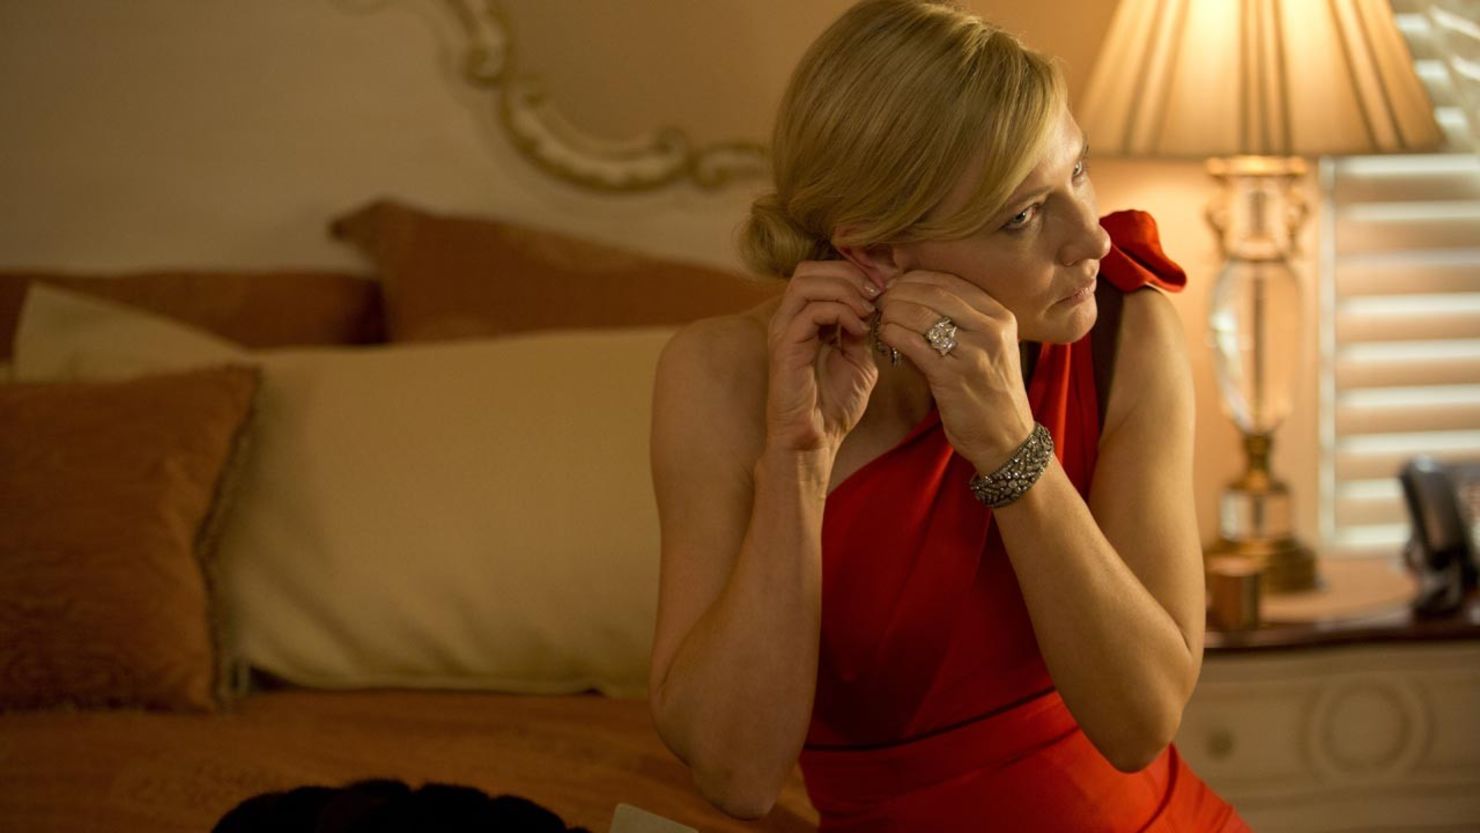 Cate Blanchett stars as a troubled New York socialite in Allen's latest film "Blue Jasmine."